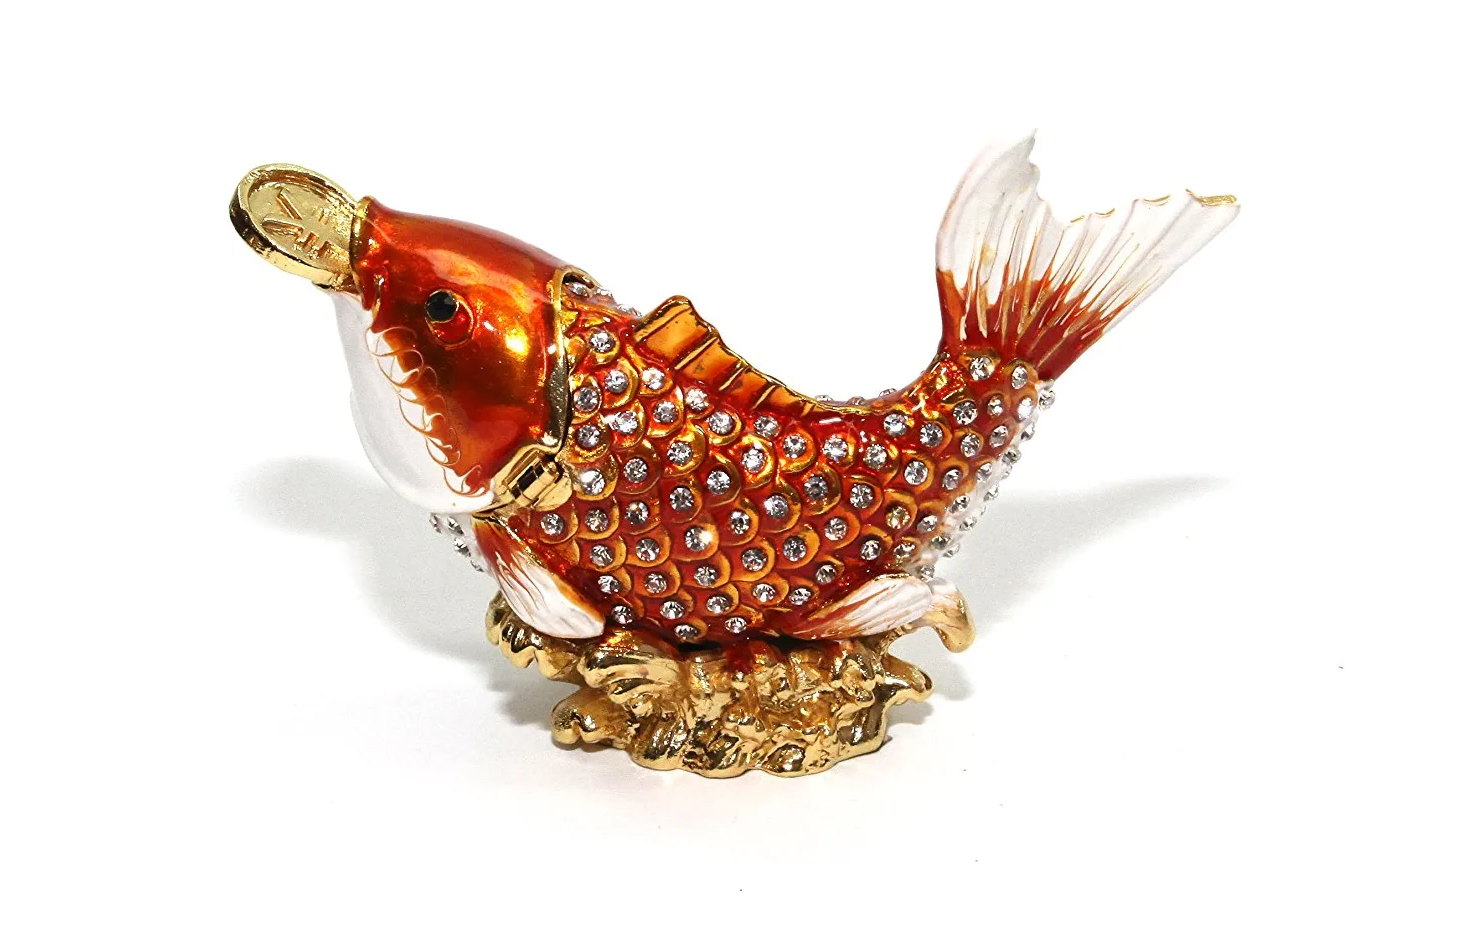 Fish 24K Gold Trinket Jewelry Box with Swarovski Crystal I Hand-made I Pakistani Artisan Design I Decoration Piece Accent I Metal Stone Decor